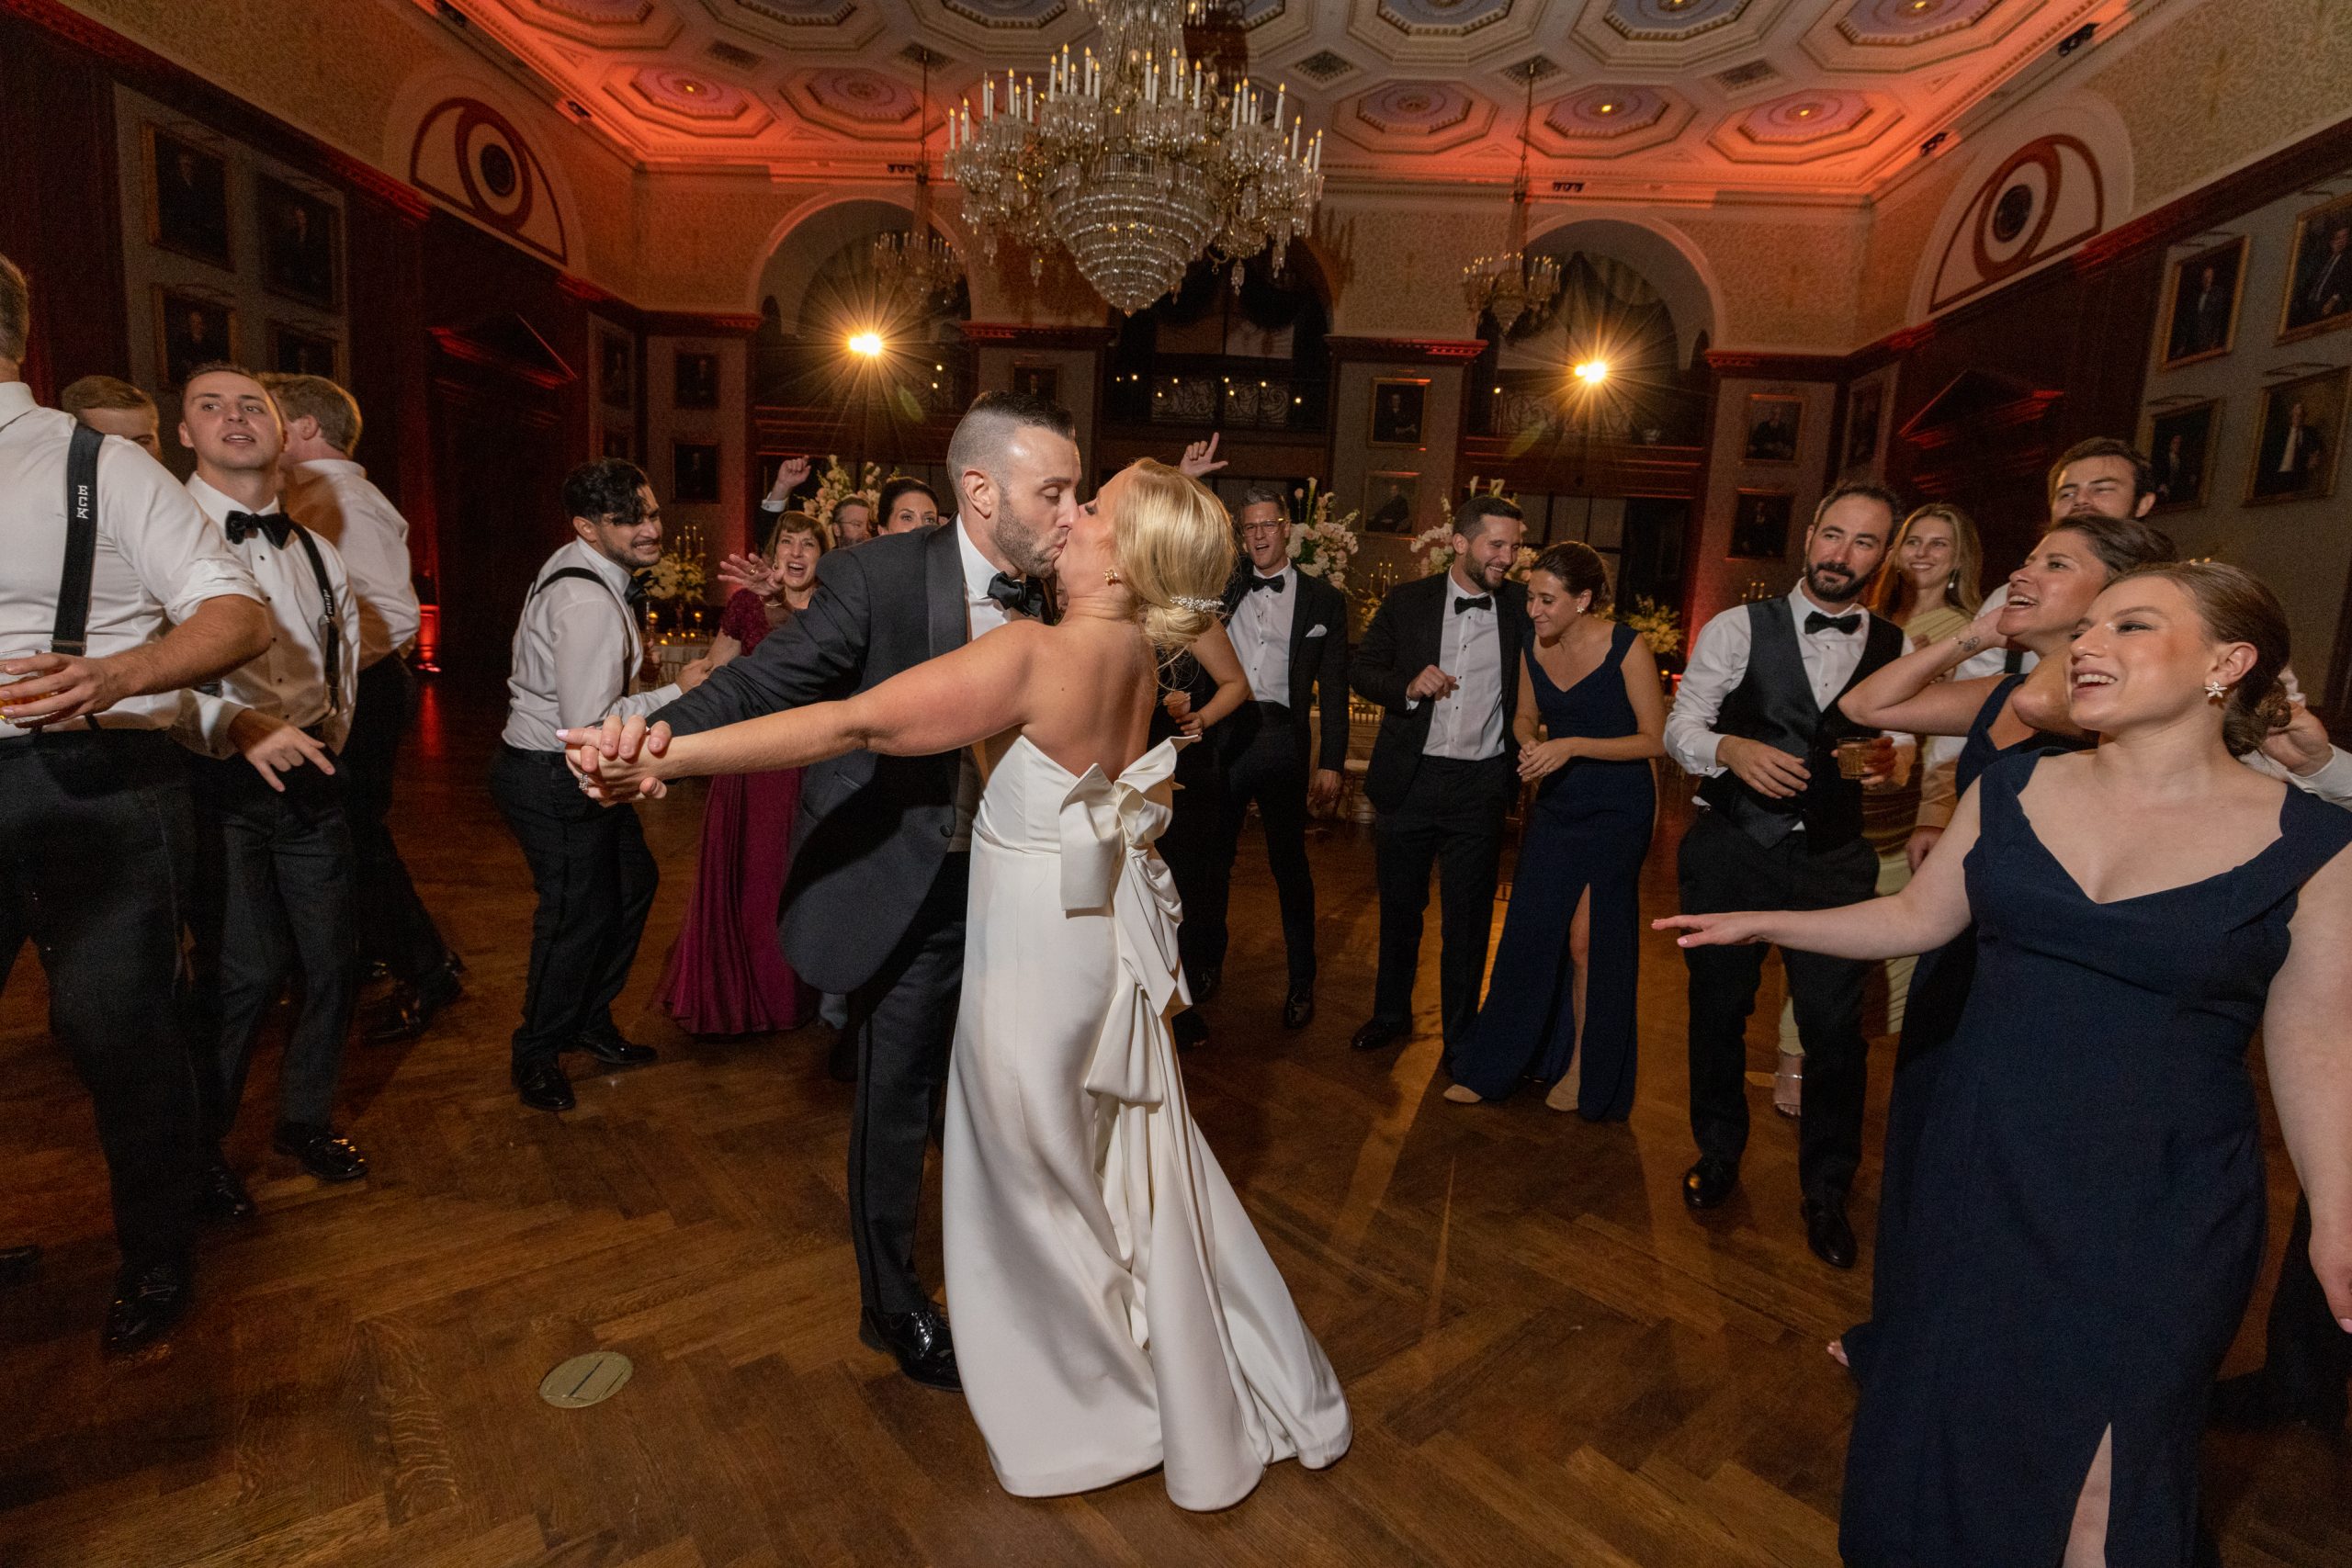 bride and groom kissing on dance floor